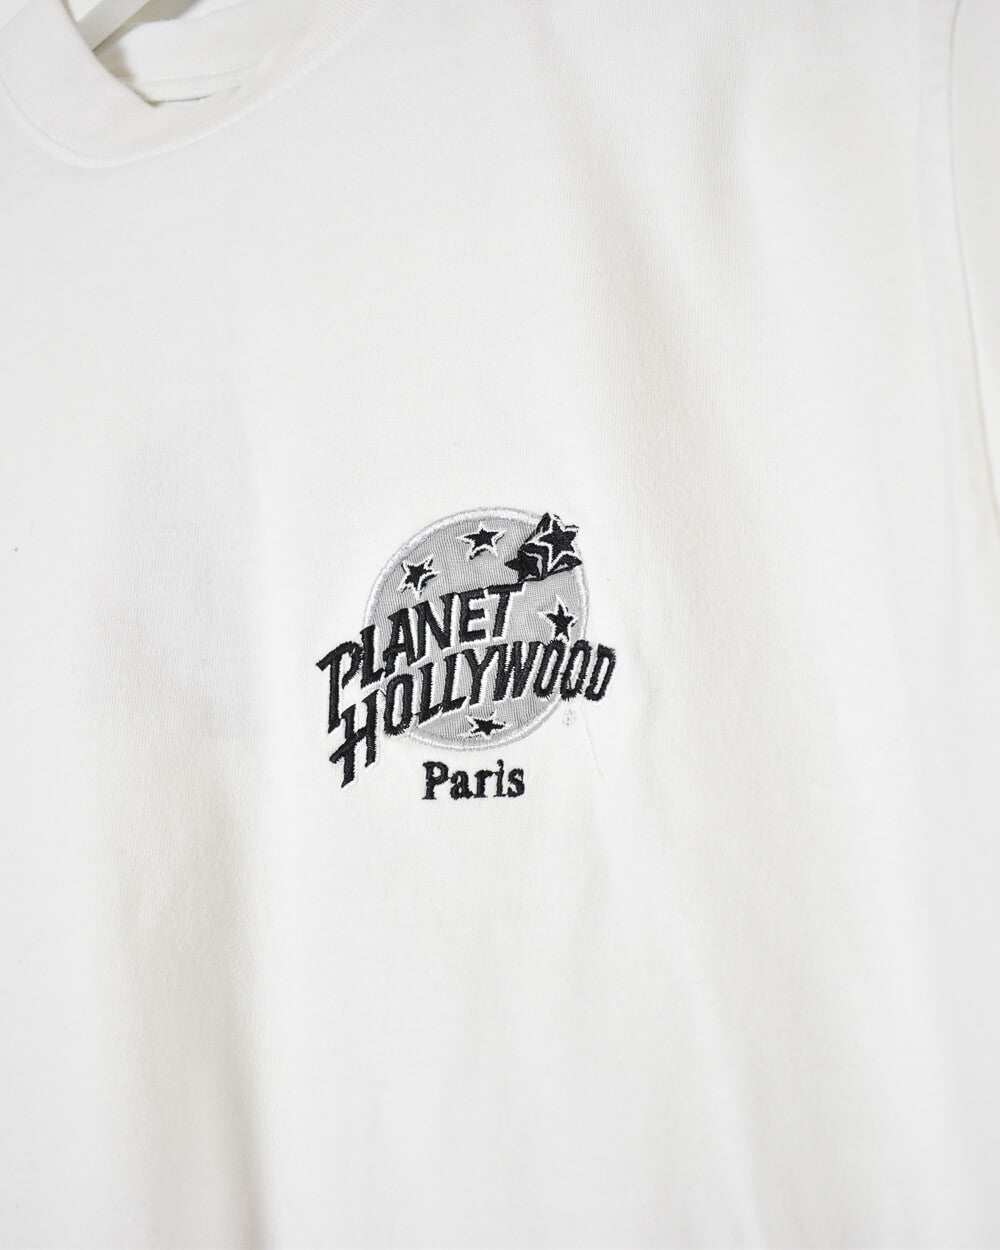 White Planet Hollywood Paris T-Shirt - Small